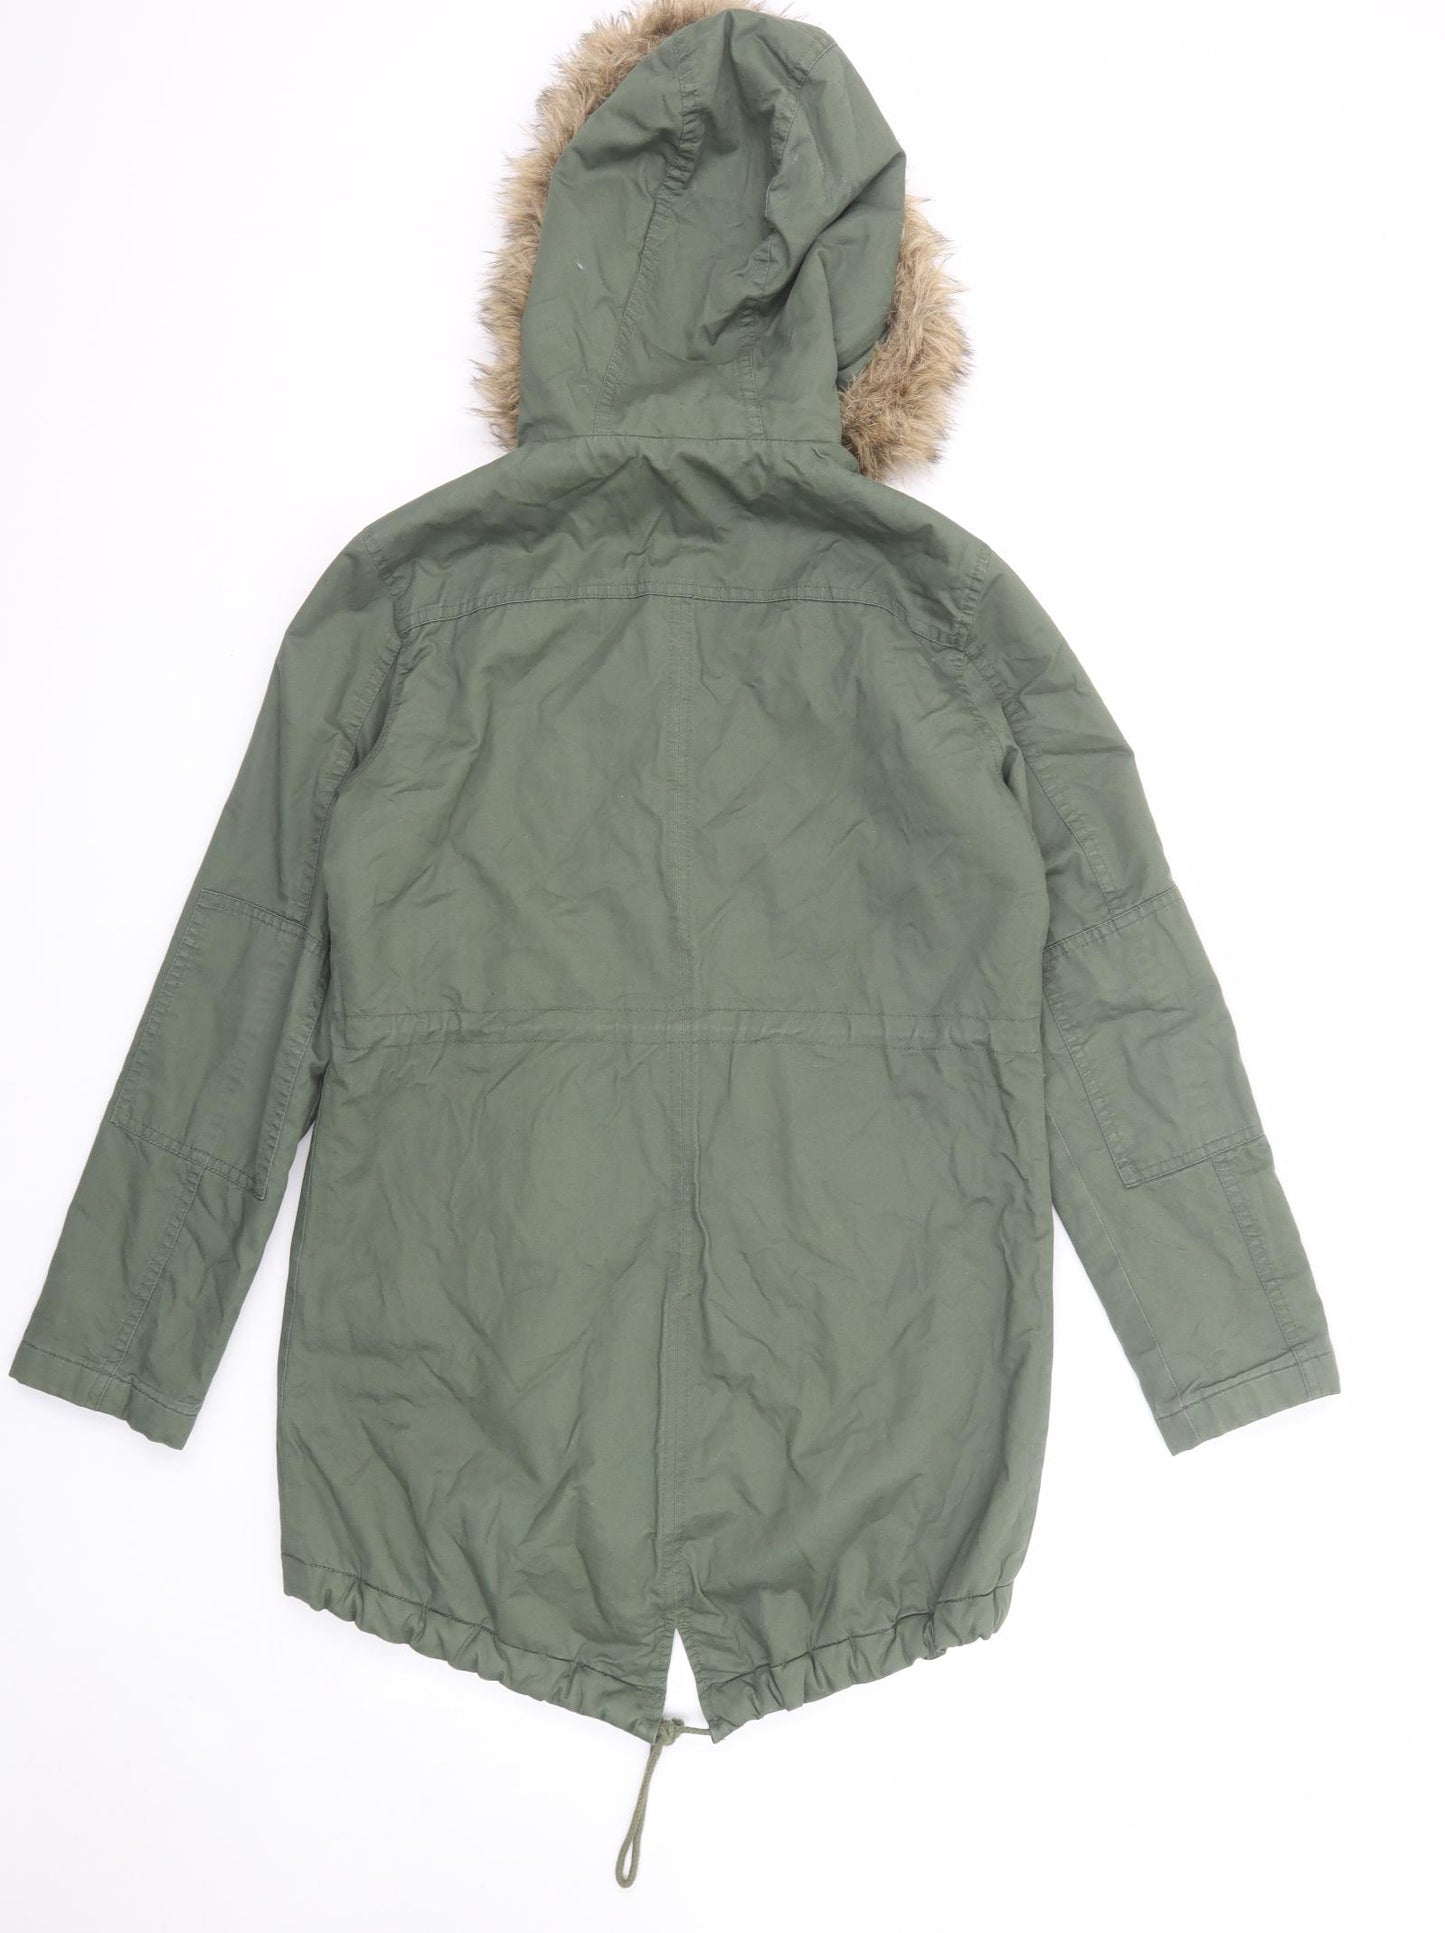 Gap Womens Green Parka Coat Size S Zip